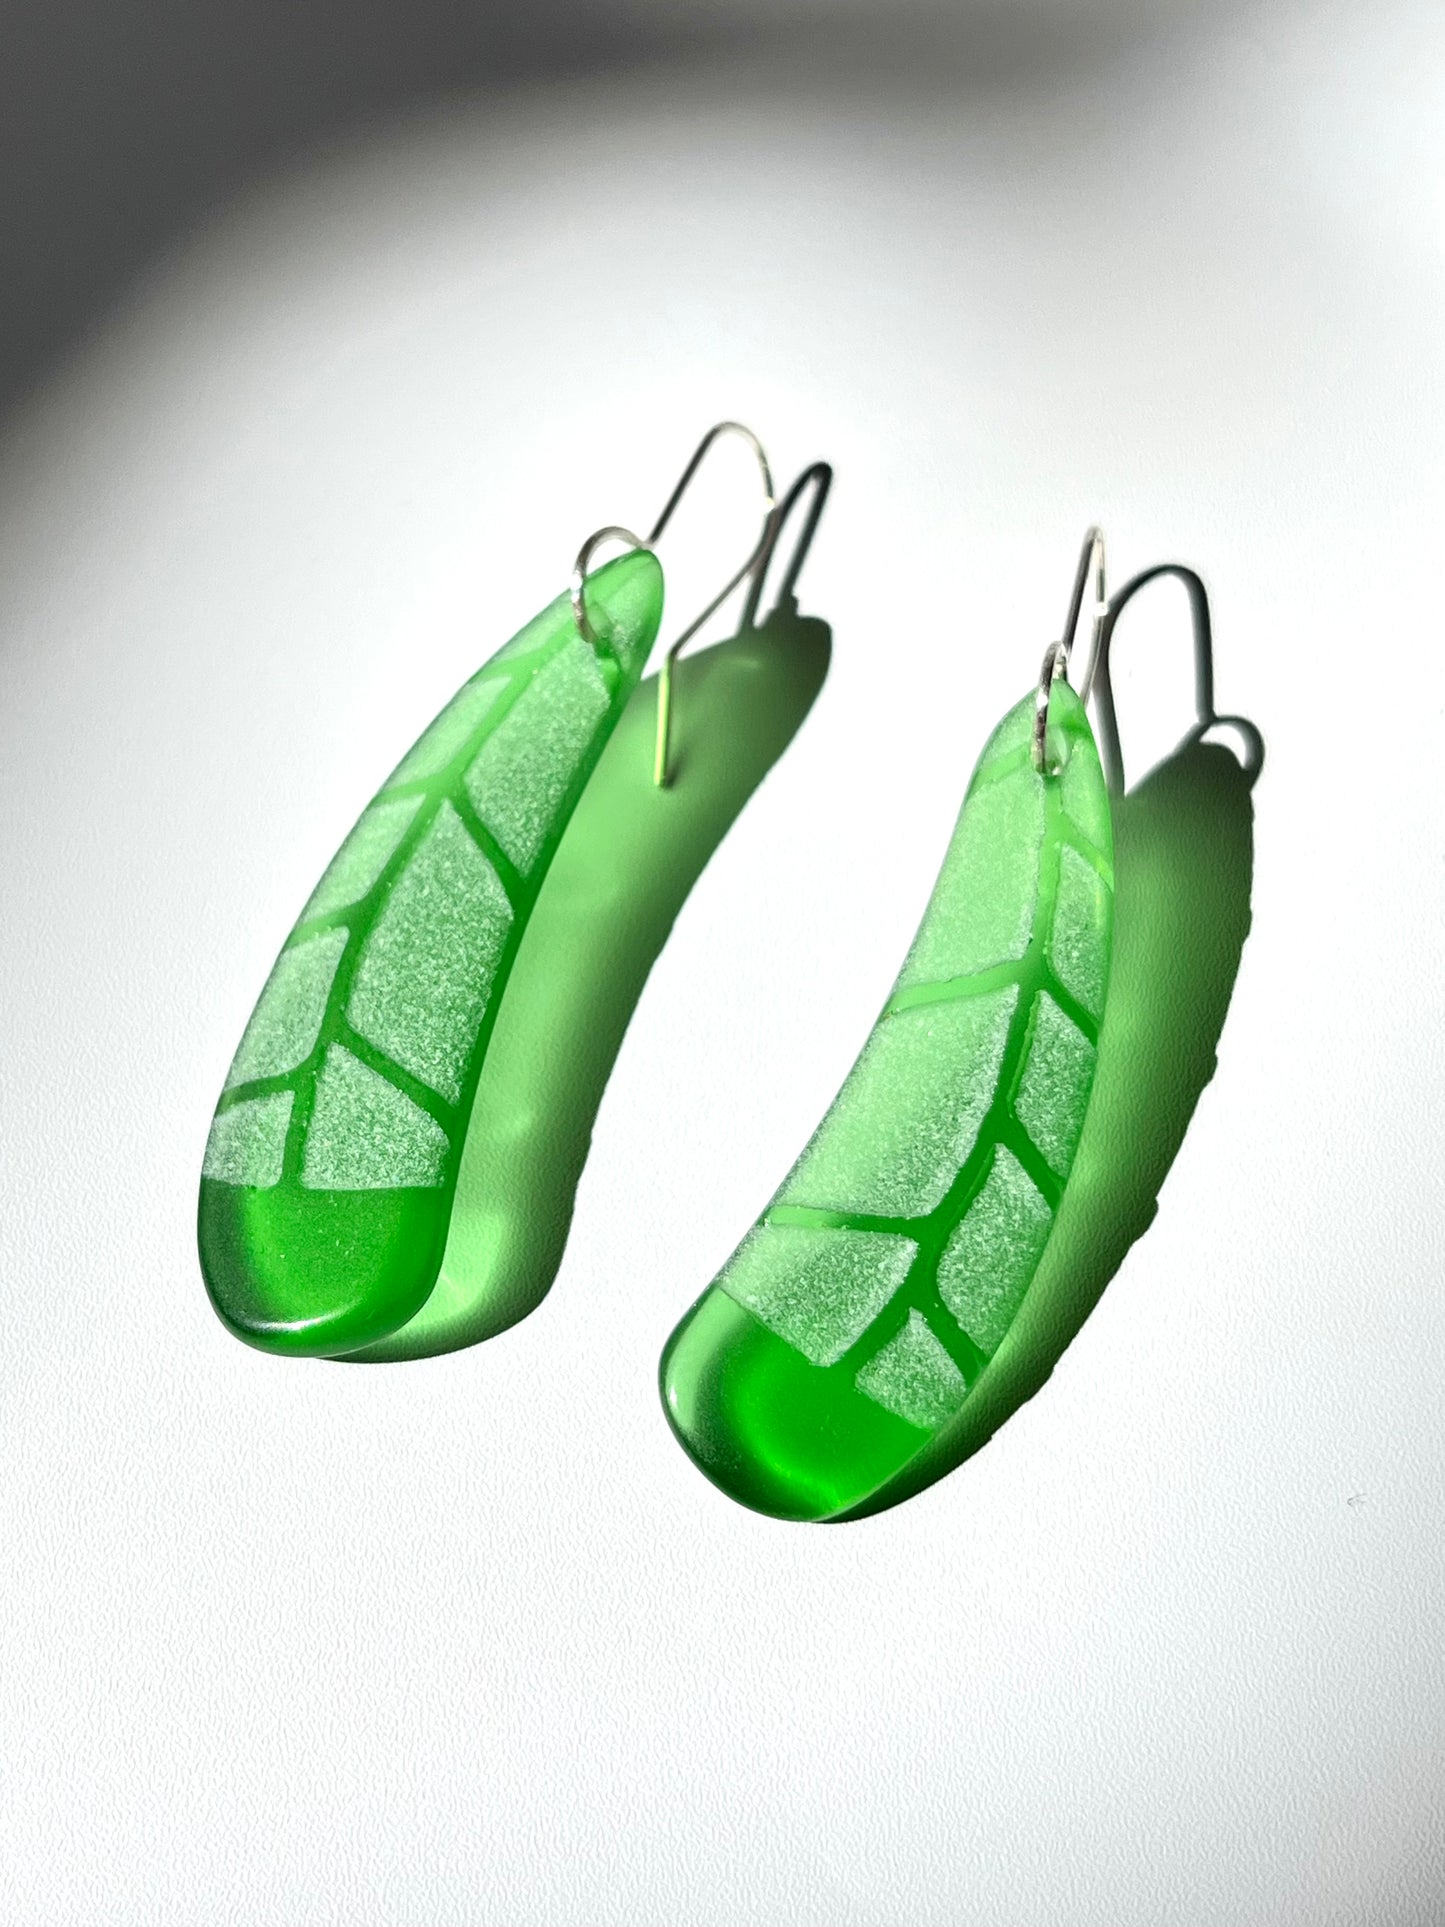 Huia Feather Earrings - Green Glass